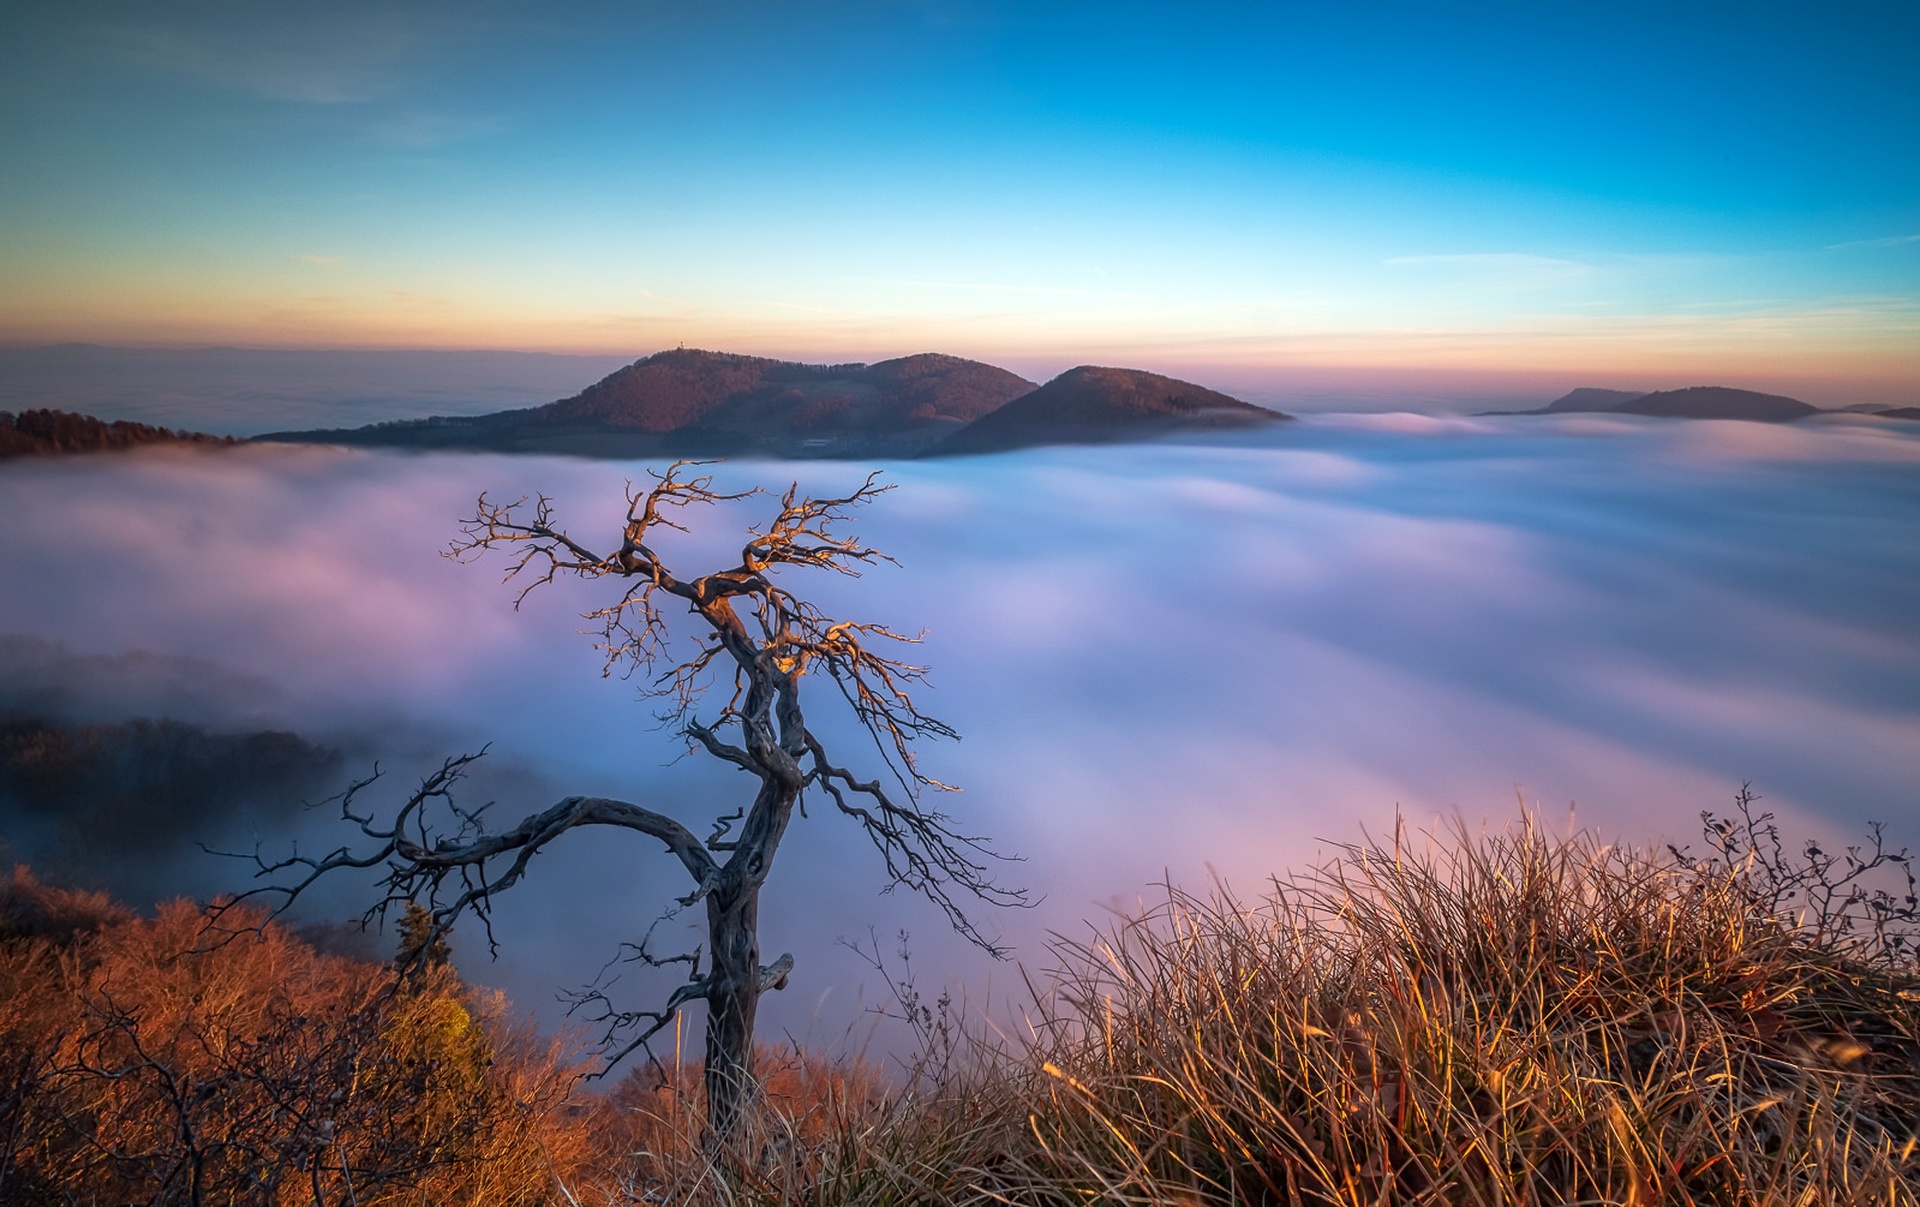 Descarga gratis la imagen Naturaleza, Horizonte, Montaña, Niebla, Panorama, Pintoresco, Tierra/naturaleza, Árbol Torcido en el escritorio de tu PC